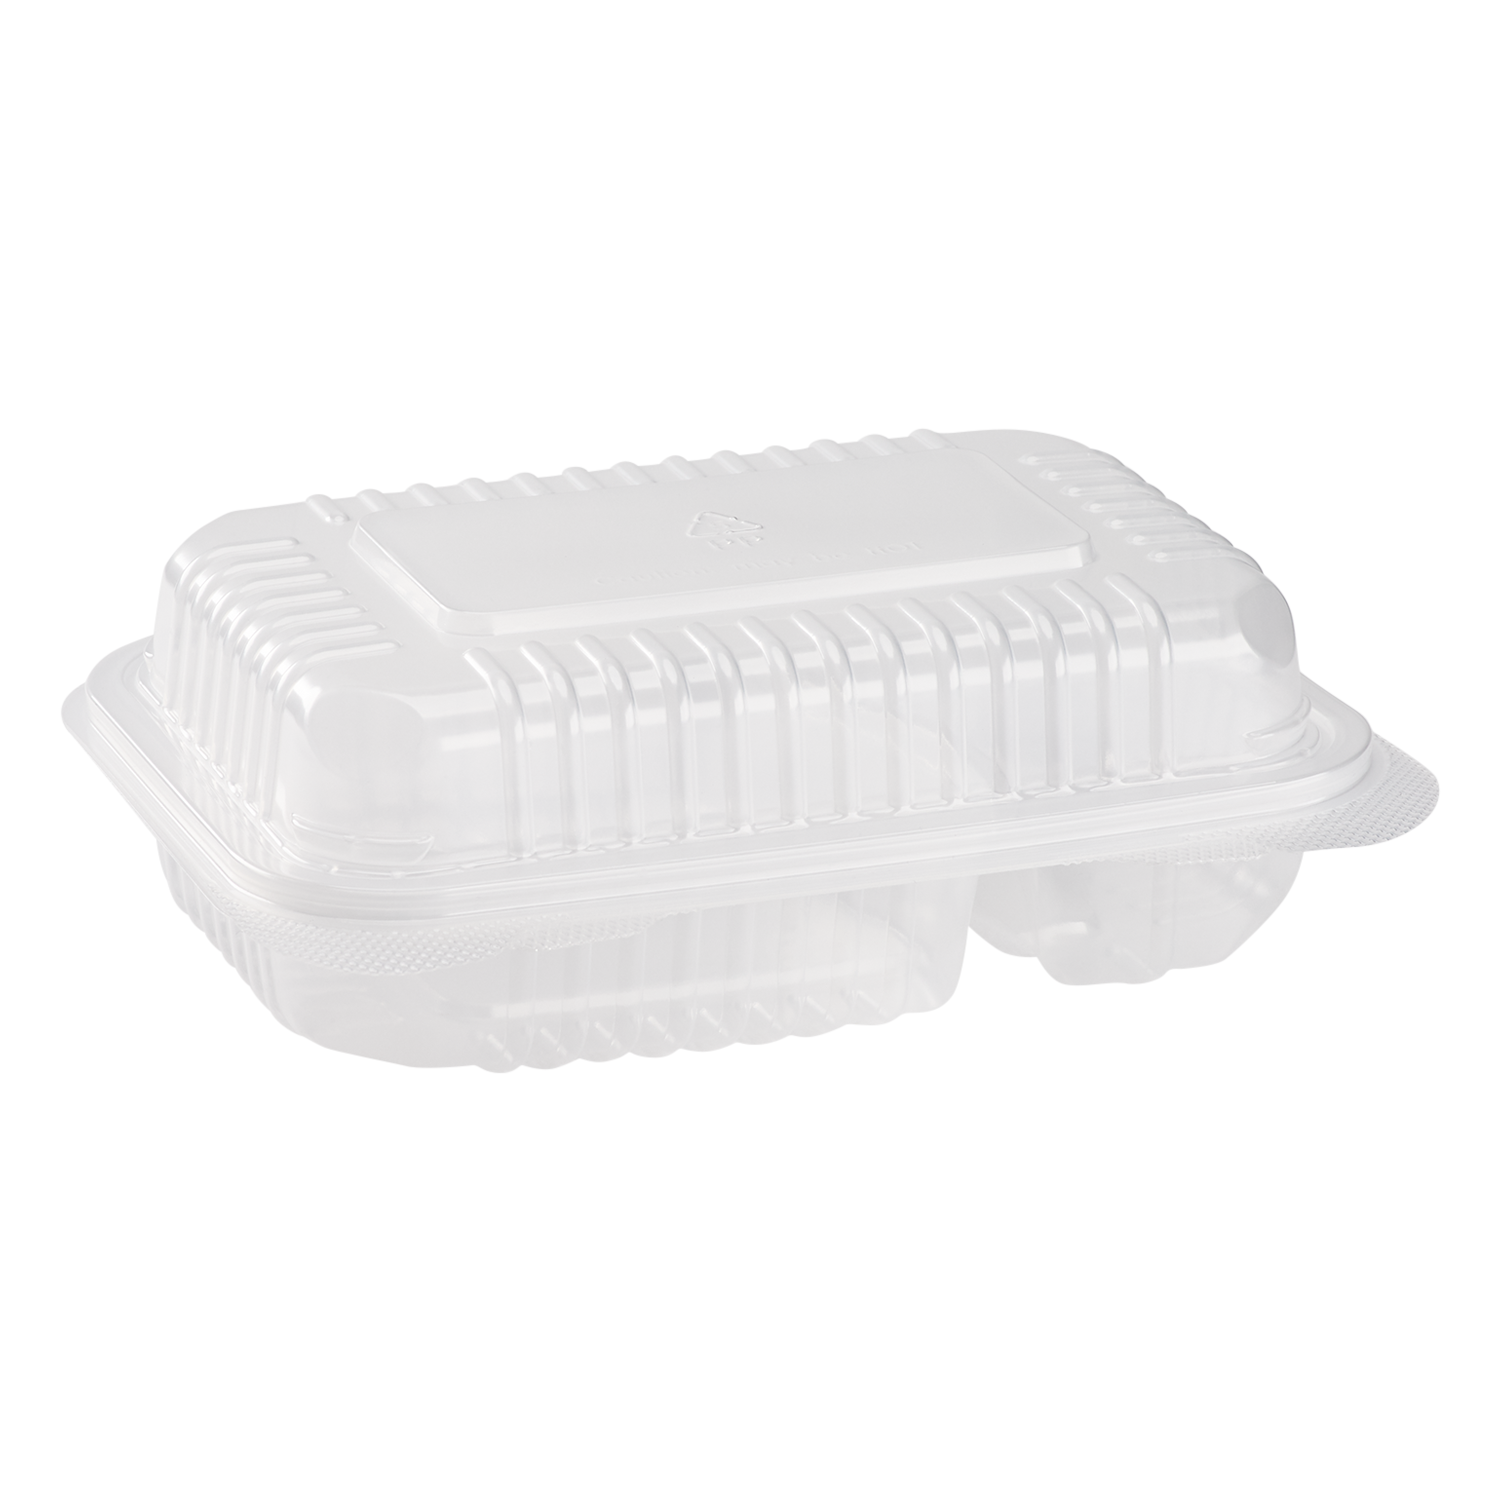 2-Compartment Clear PET Plastic Snack Box